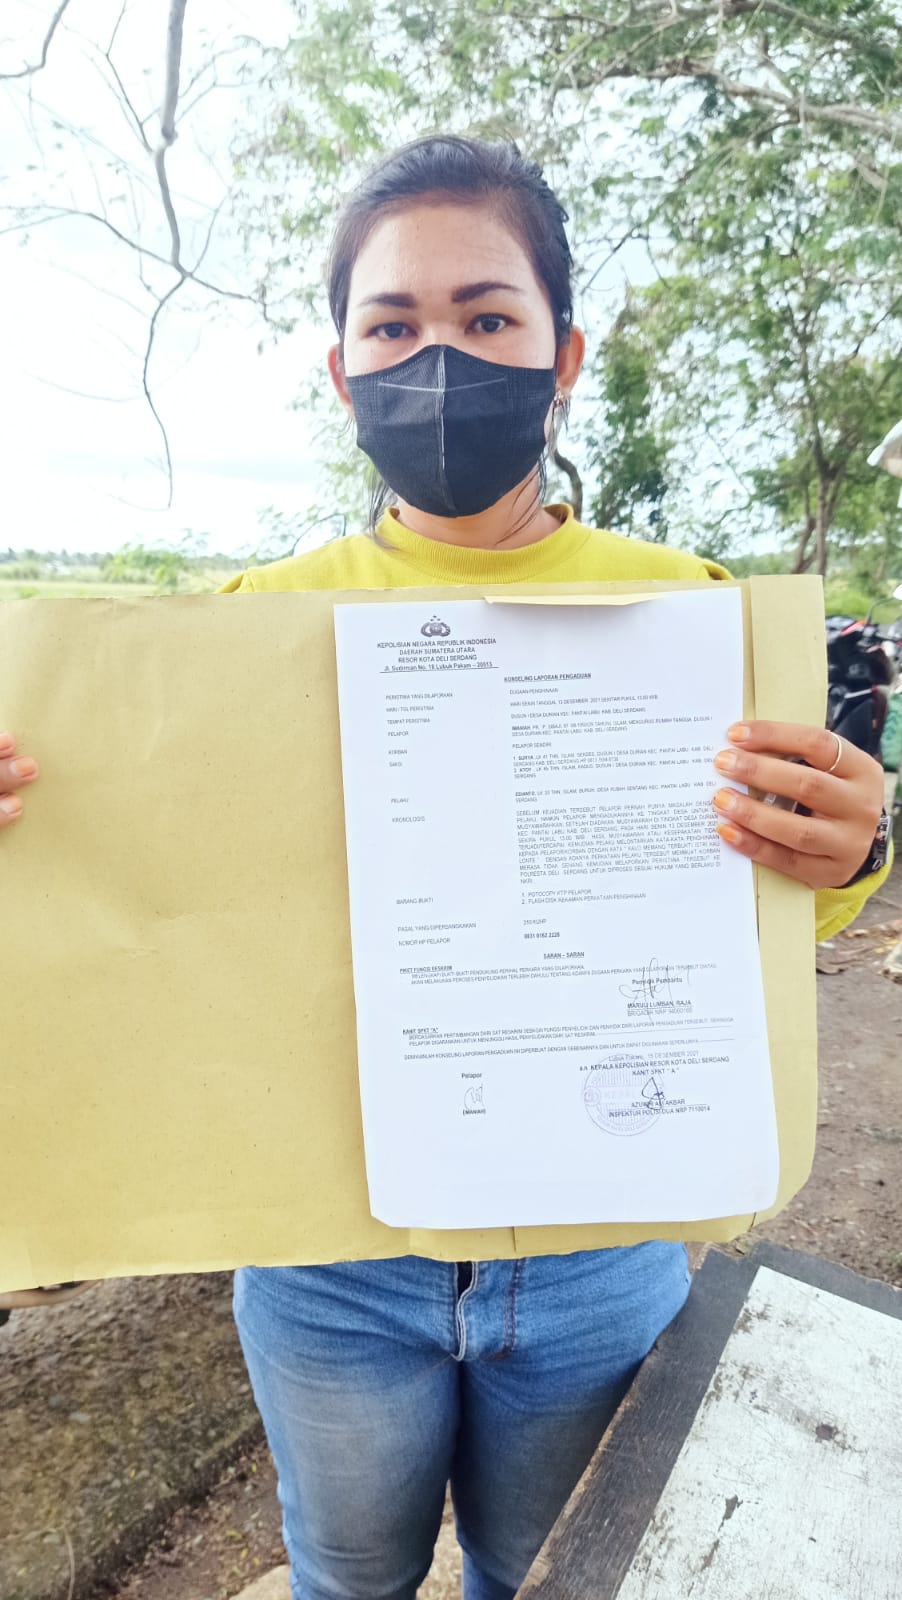 Warga Desa Durian korban Penghinaan minta Pelaku segera Diproses sesuai Aturan Hukum